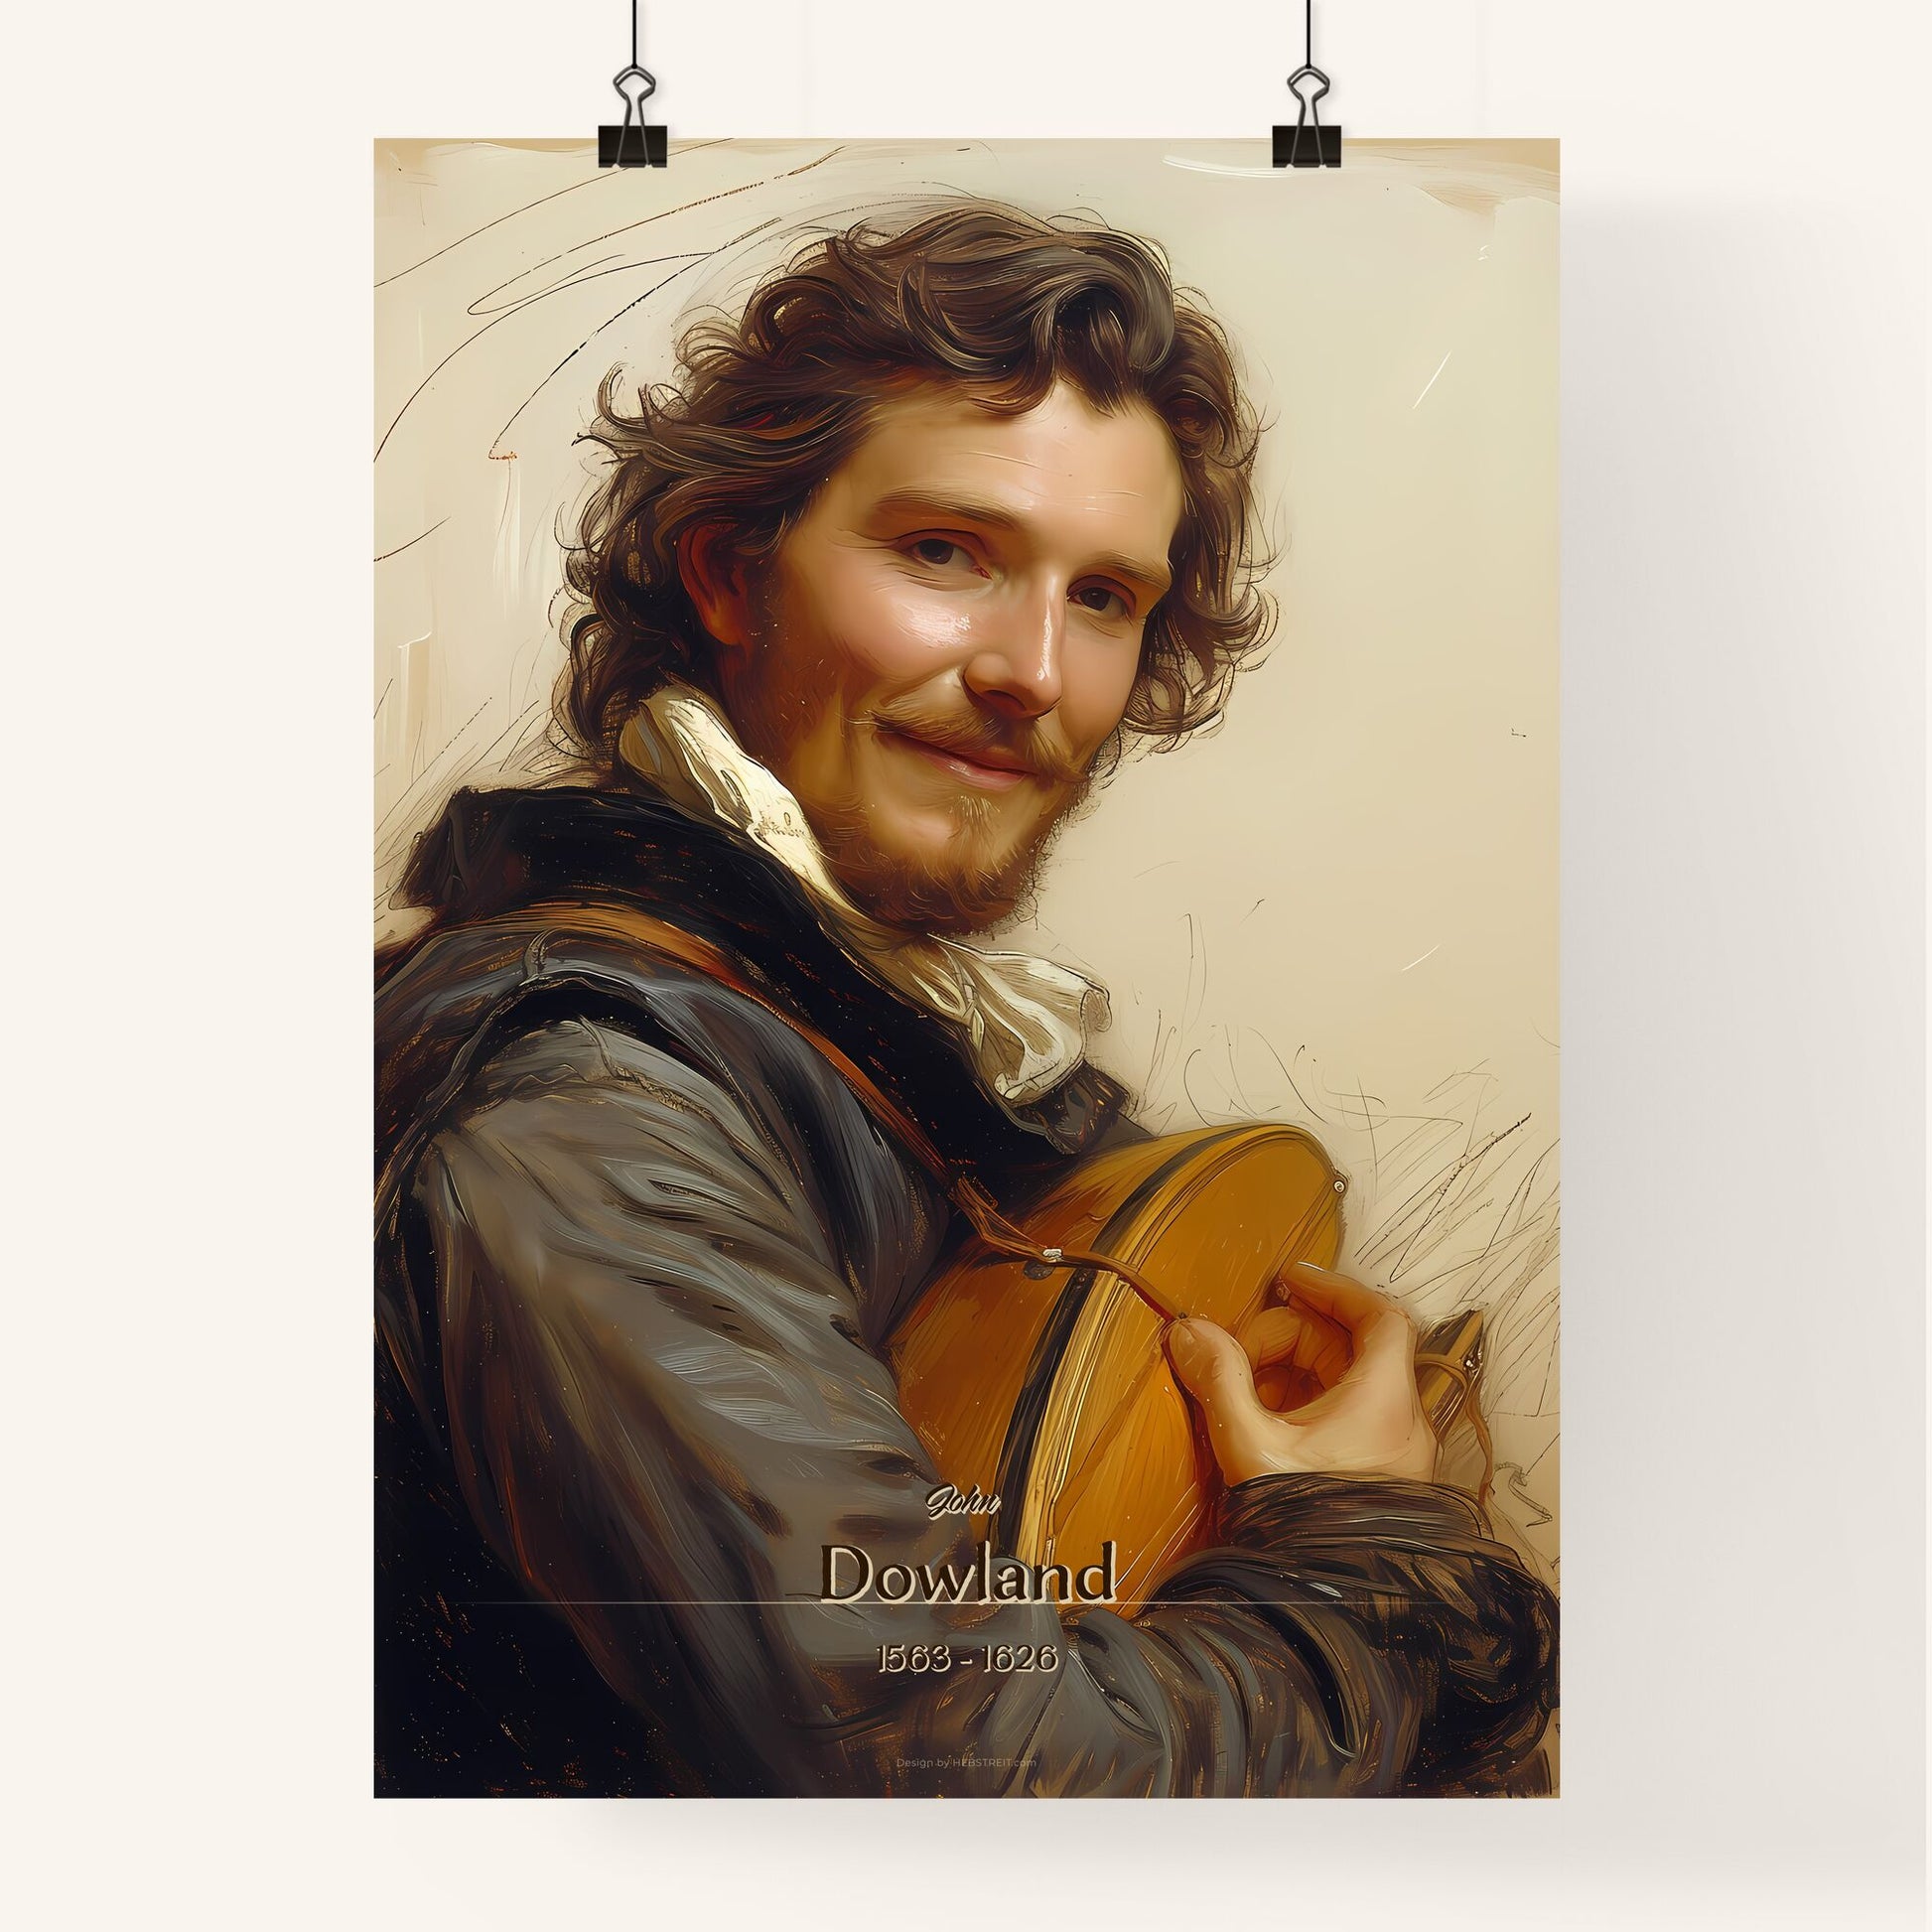 John, Dowland, 1563 - 1626, A Poster of a man holding a guitar Default Title